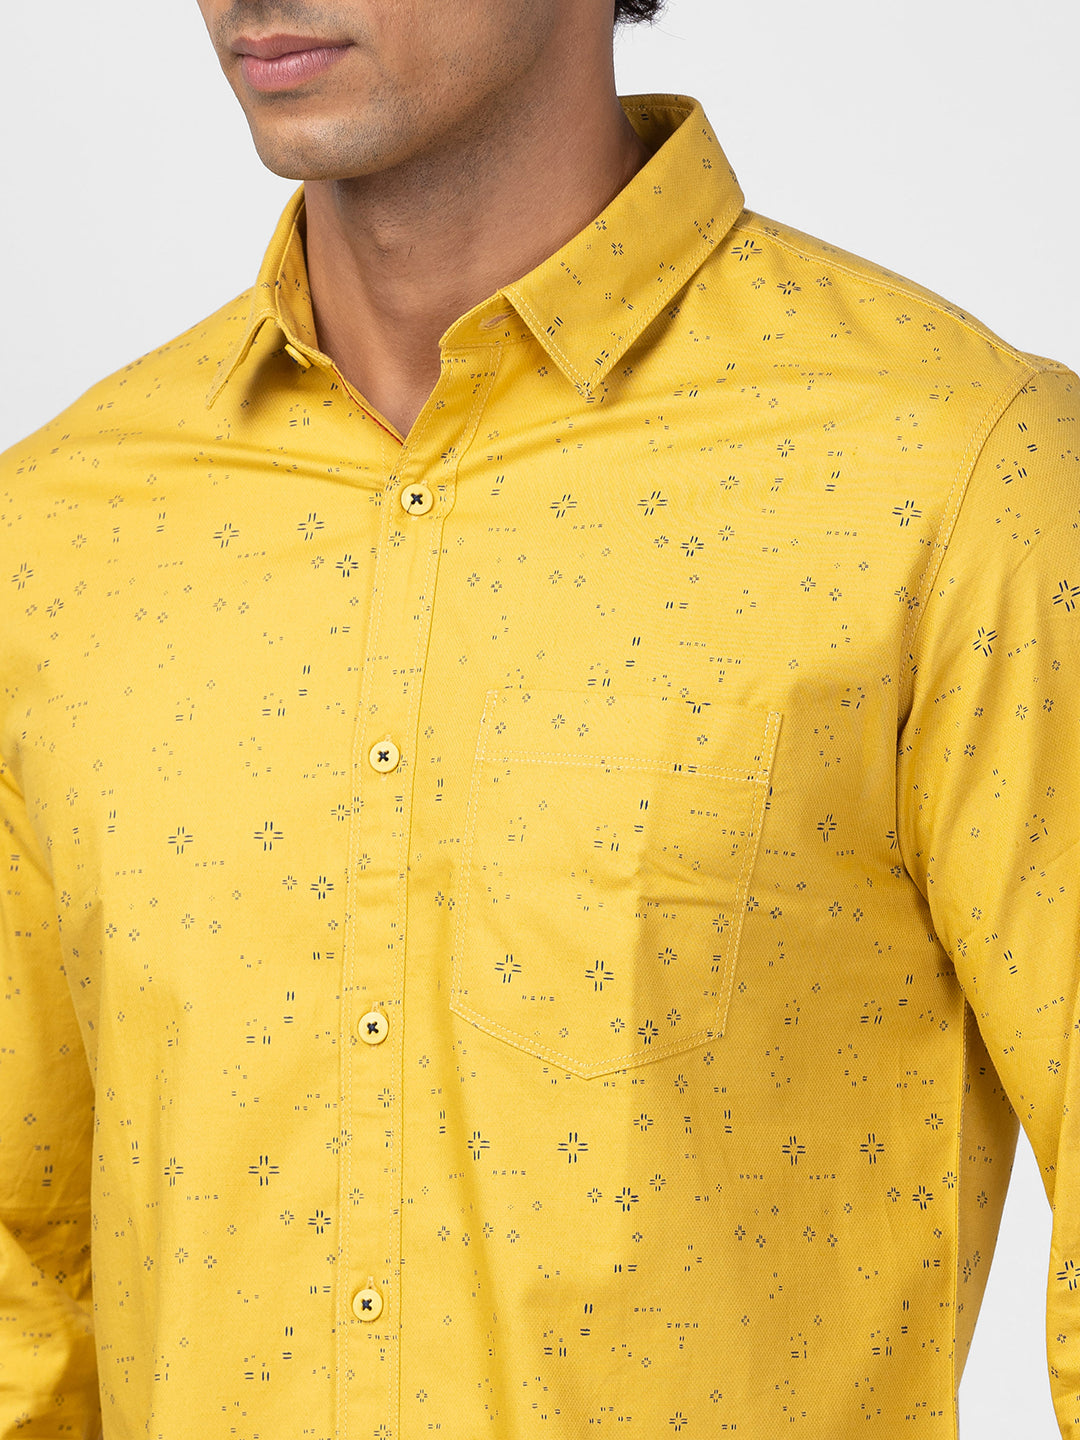 Spykar Men Sulphur Yellow Cotton Slim Fit Printed Shirt